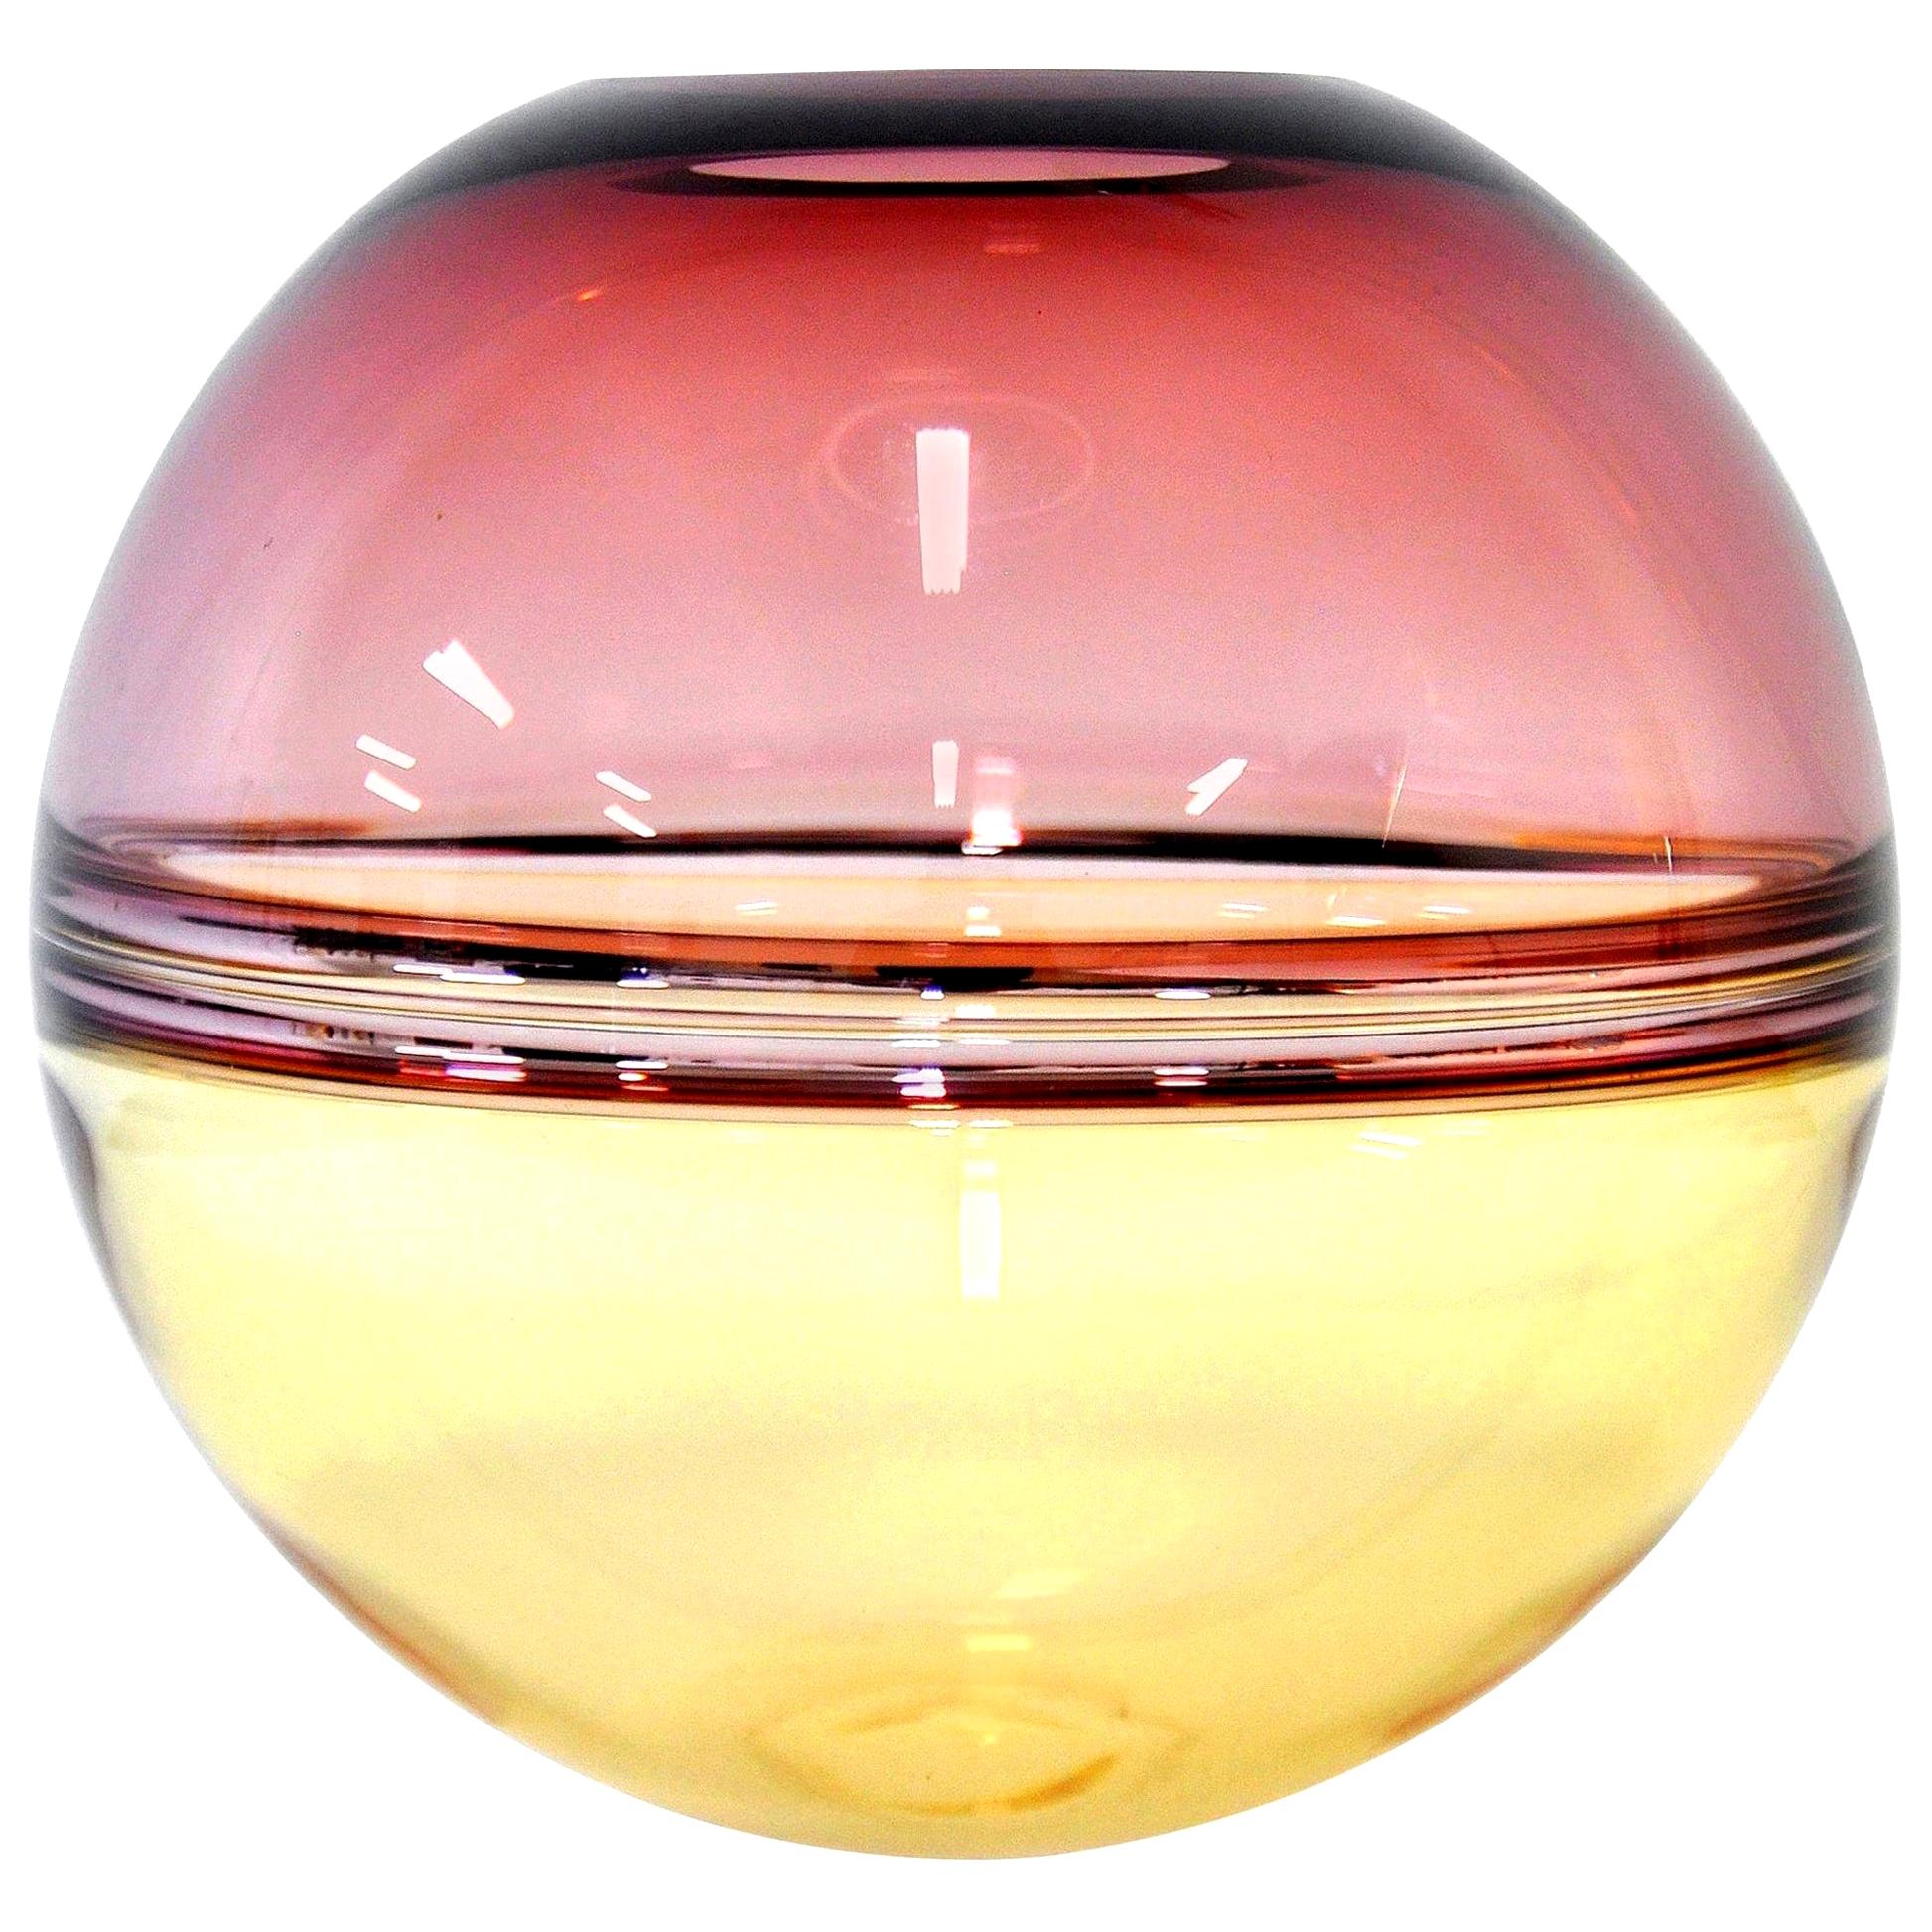 Barbini Amethyst and Amber Murano Glass Incalmo Sphere Vase